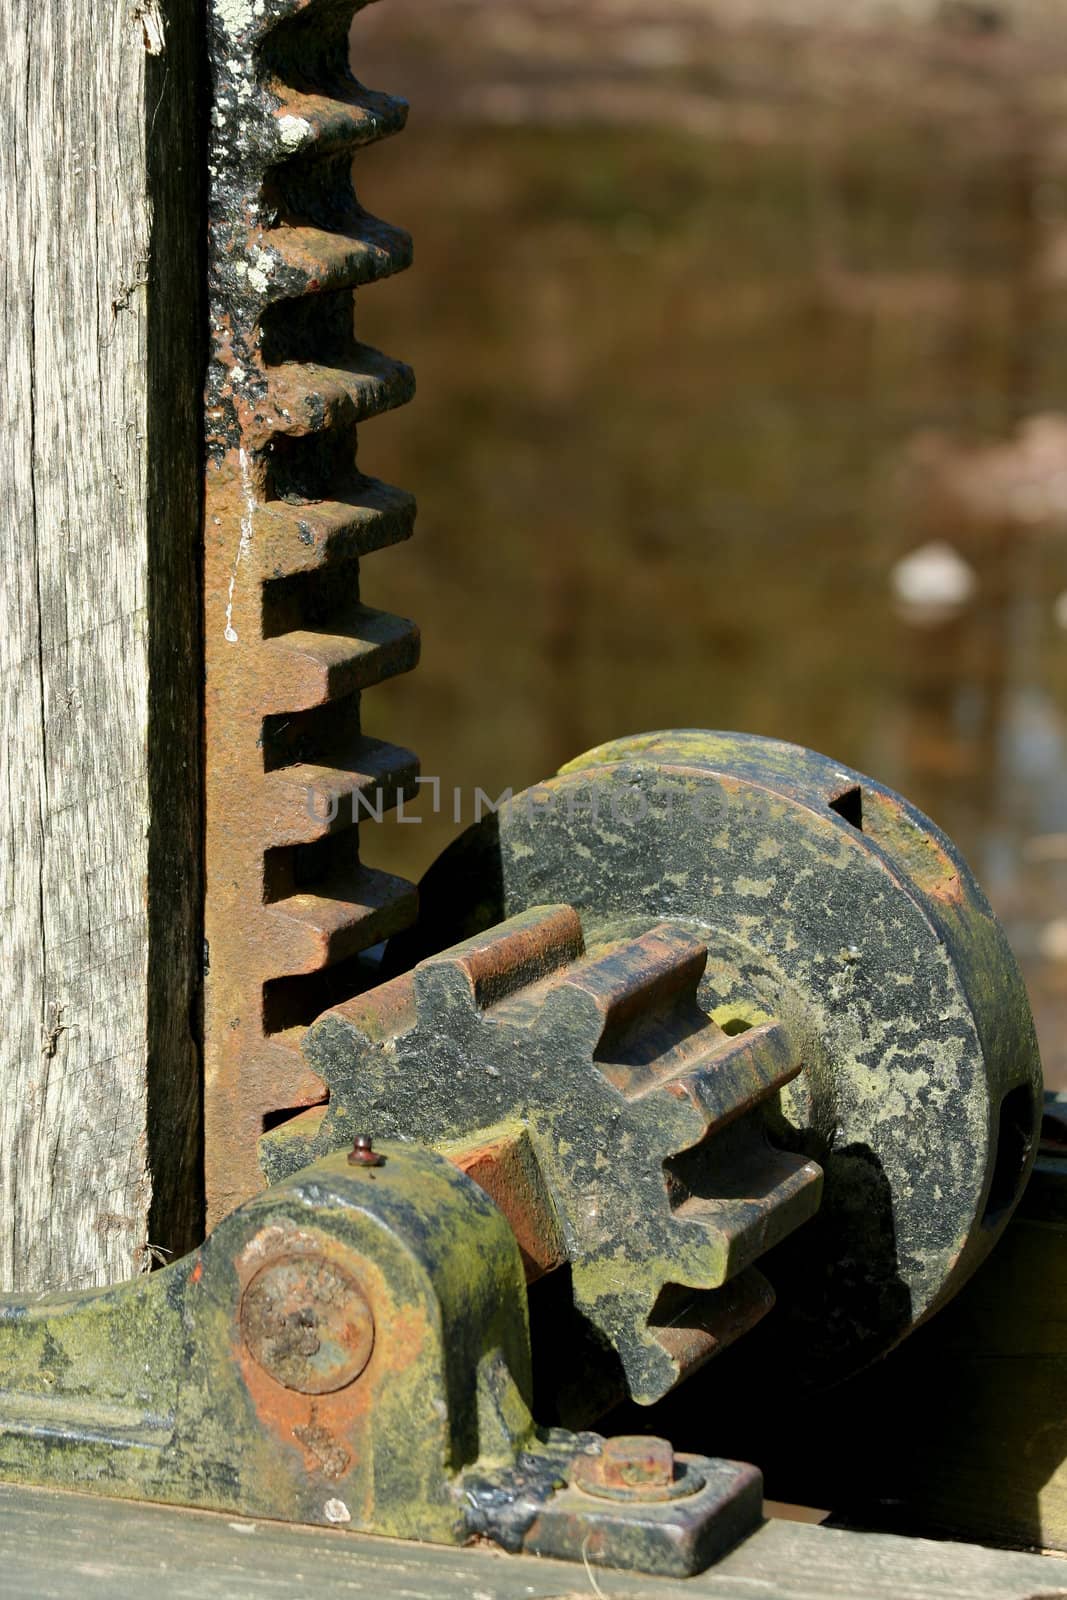 A Old rusty metal gear